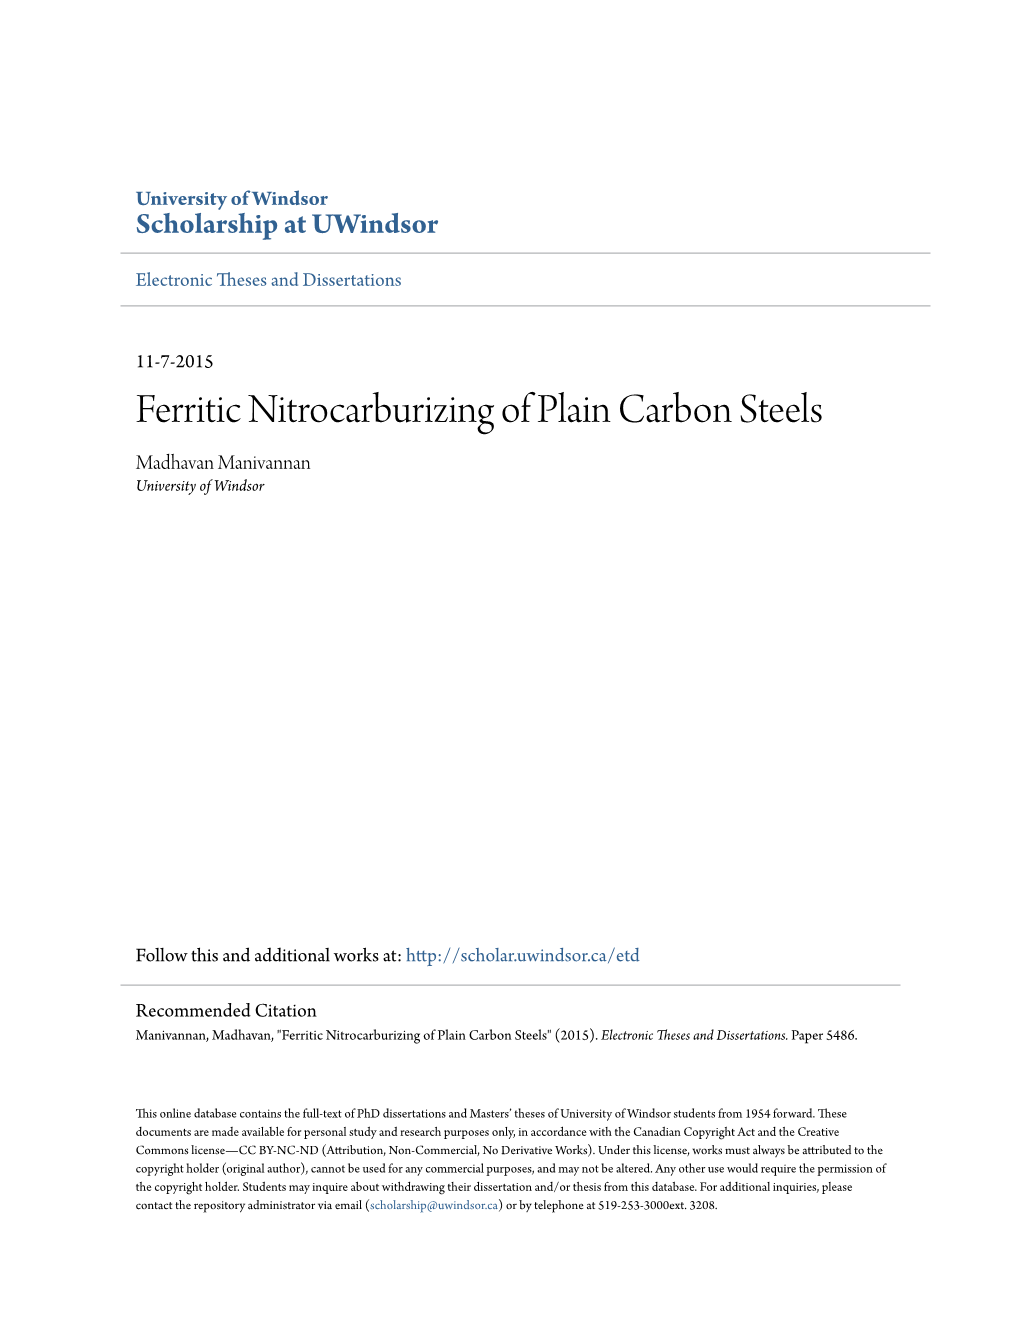 Ferritic Nitrocarburizing of Plain Carbon Steels Madhavan Manivannan University of Windsor